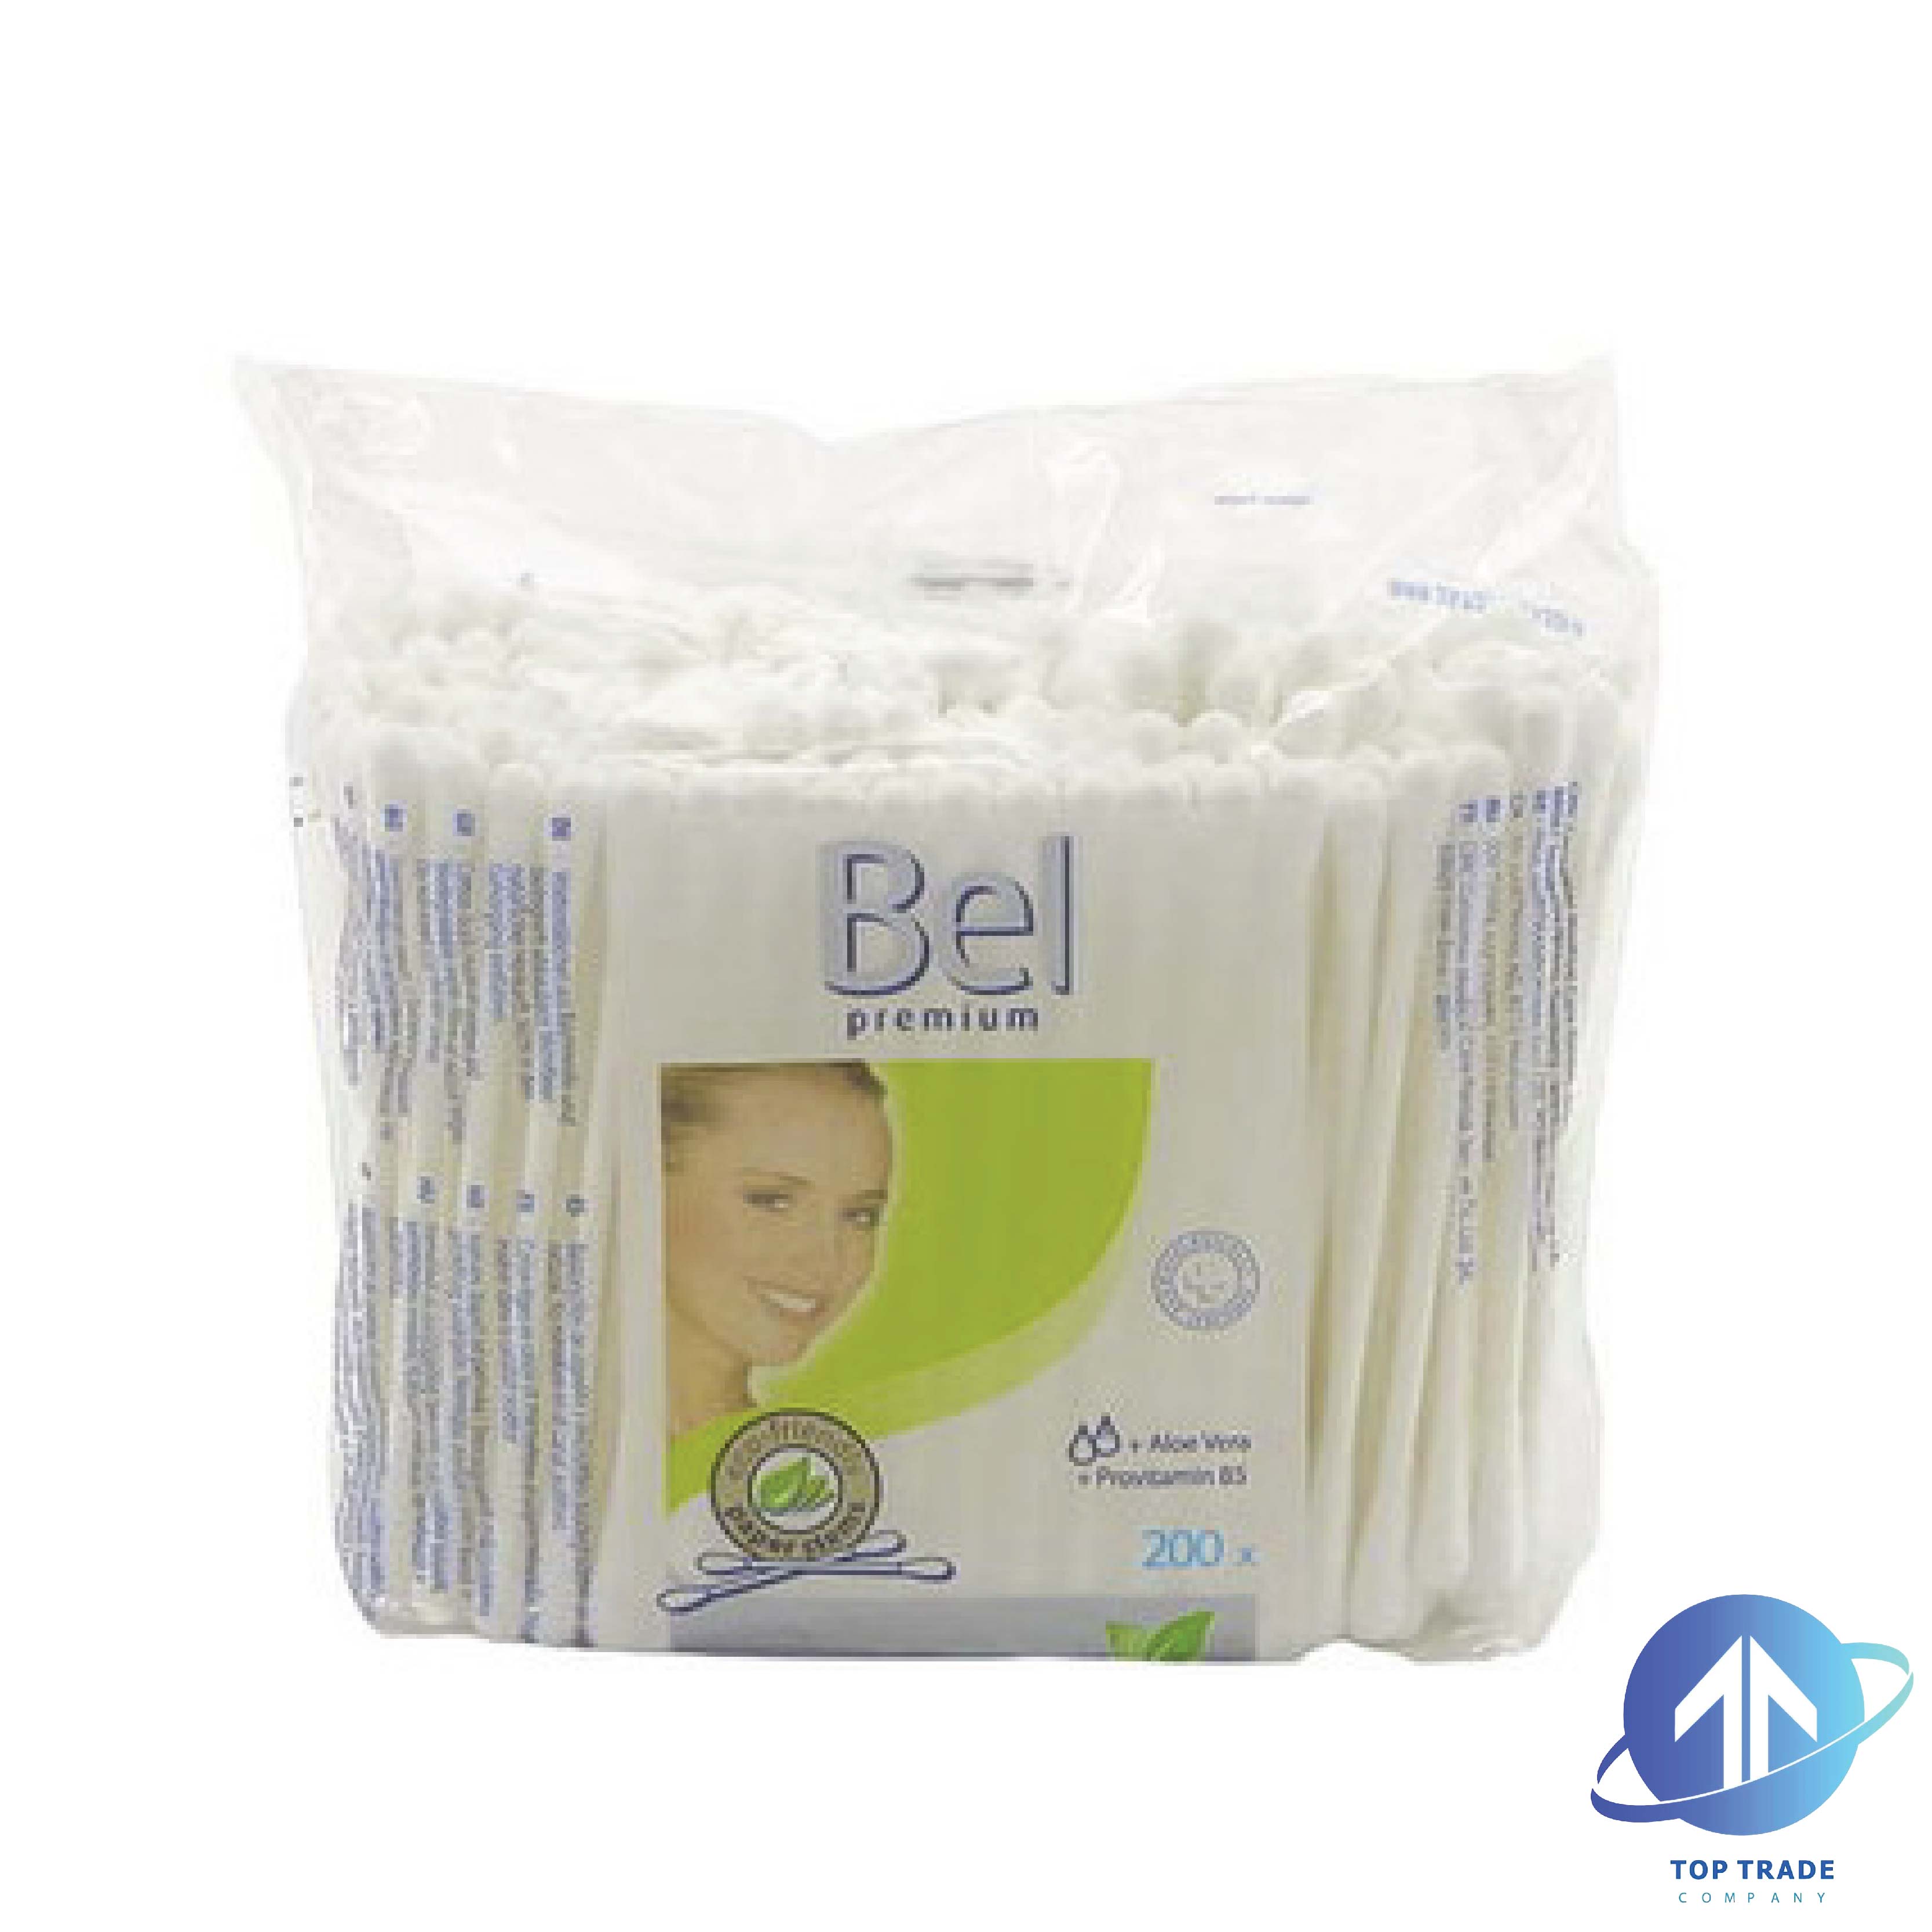 Bel Premium refill cotton buds 200pcs